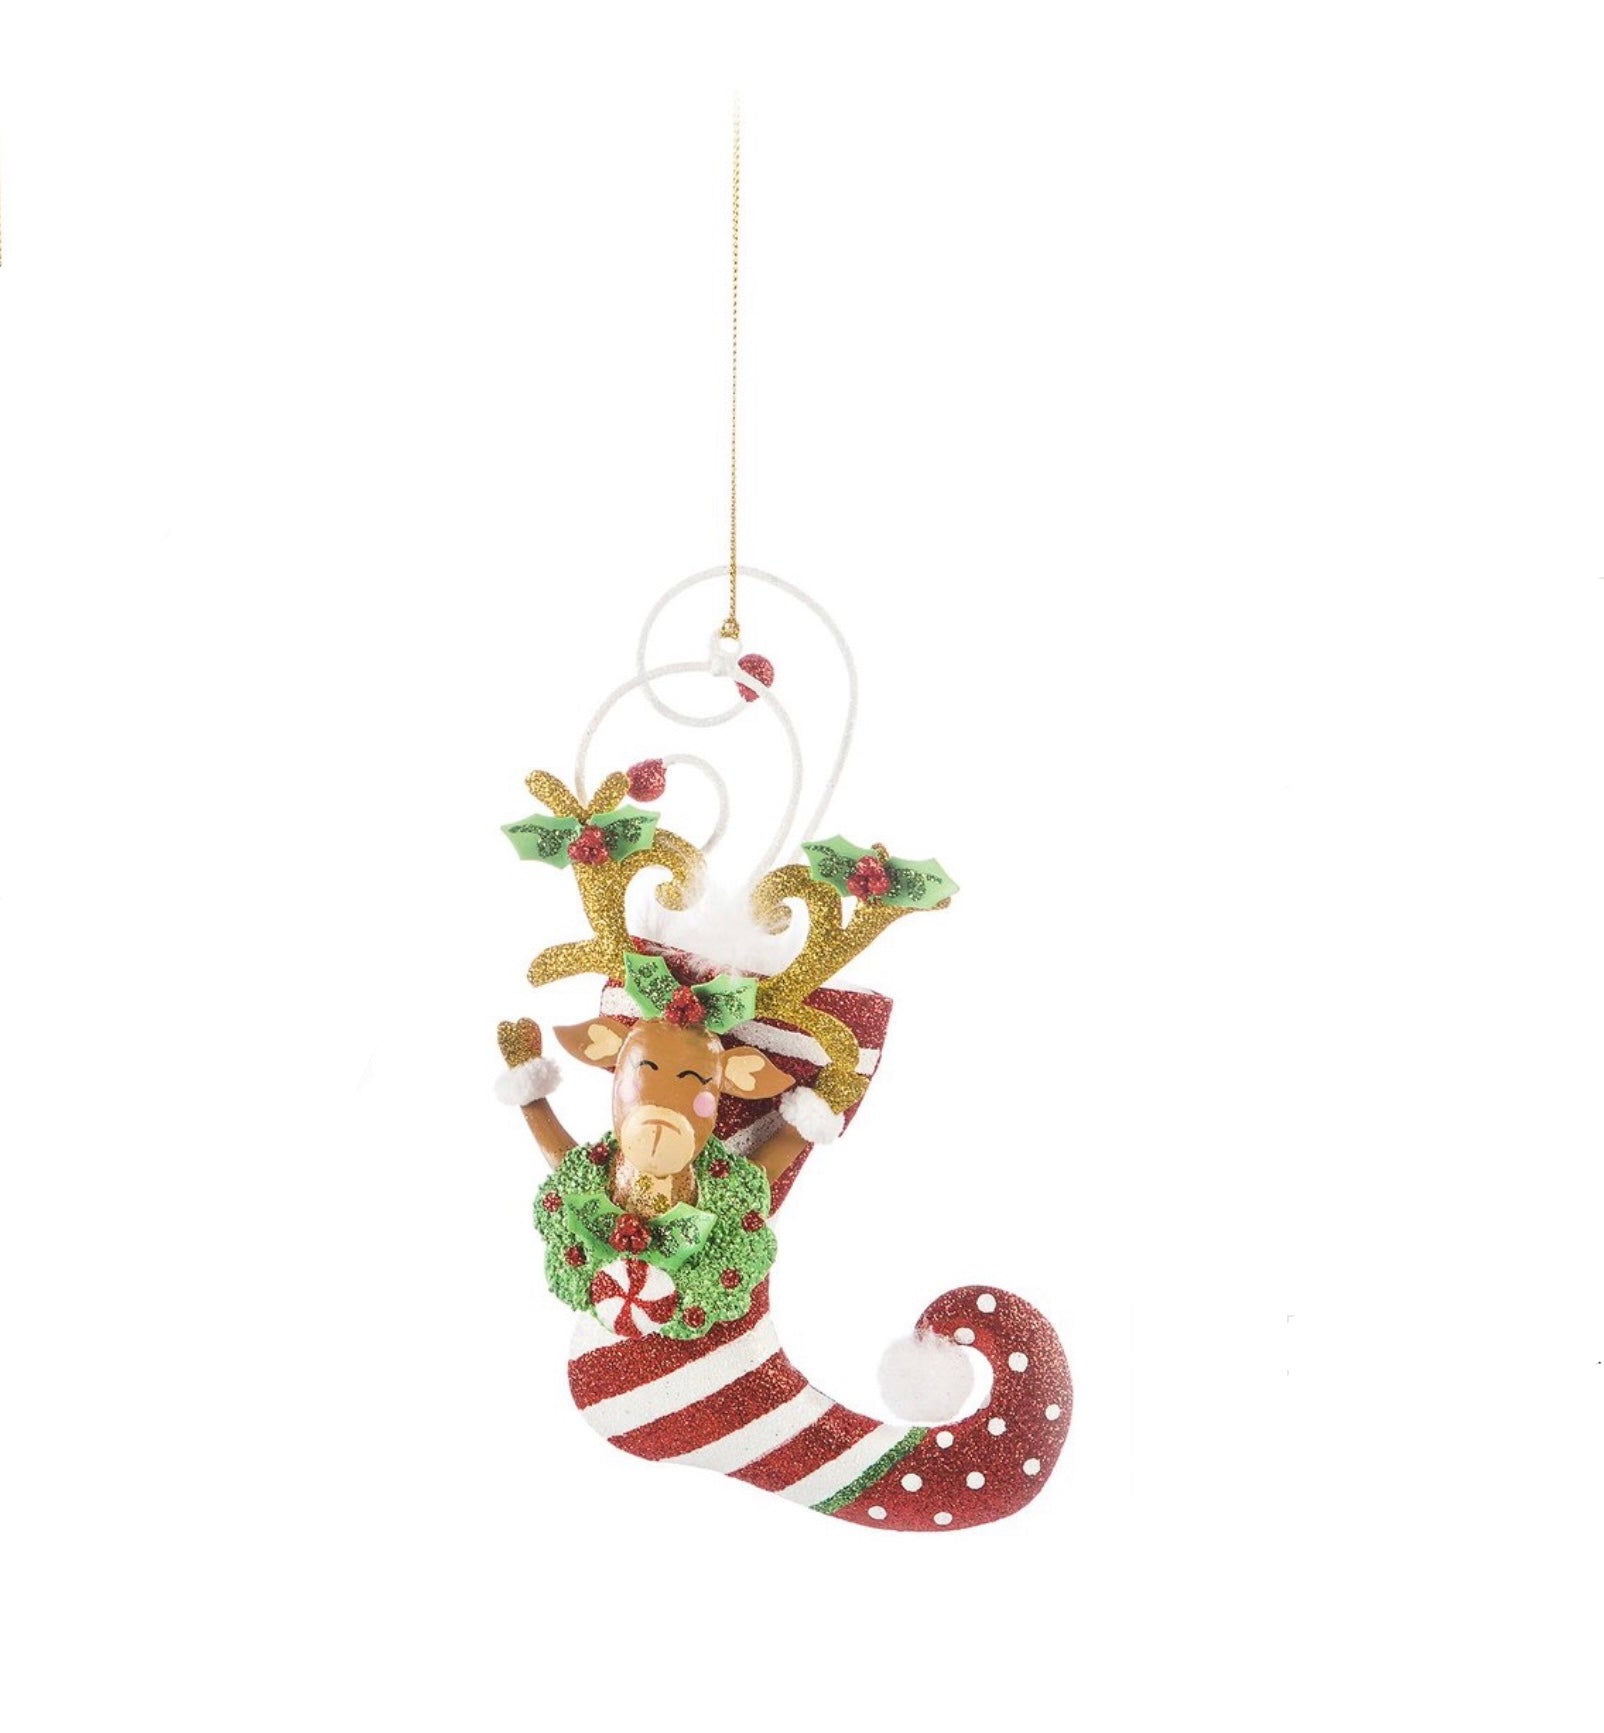 Kringles Stocking Reindeer Ornament (Striped)